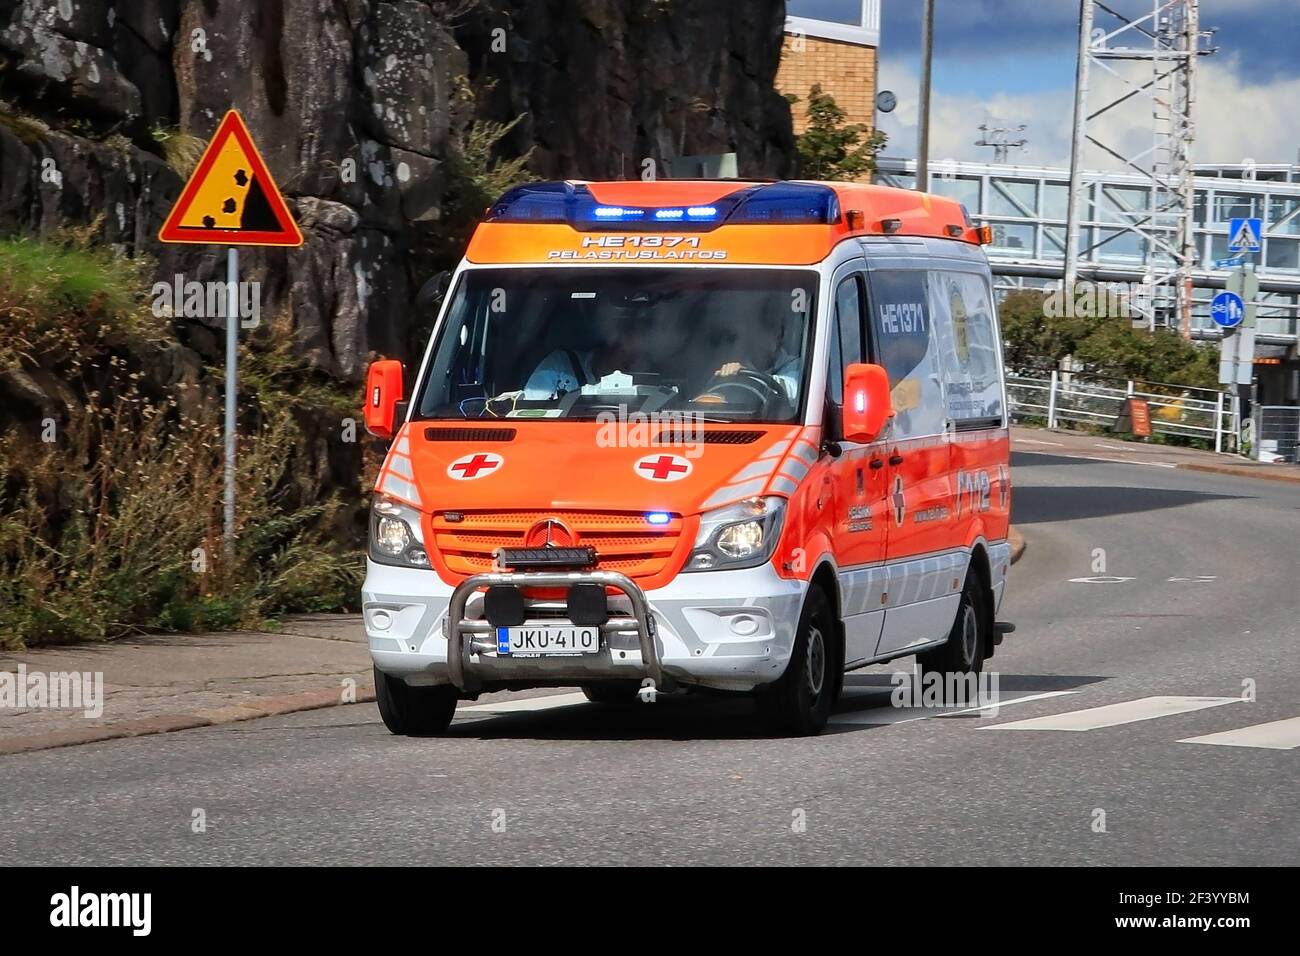 Ambulance emergency vehicle on emergency call speeding along street during the day. Detail: Falling rocks traffic sign. Helsinki, Finland. Aug 24, 20. Stock Photo